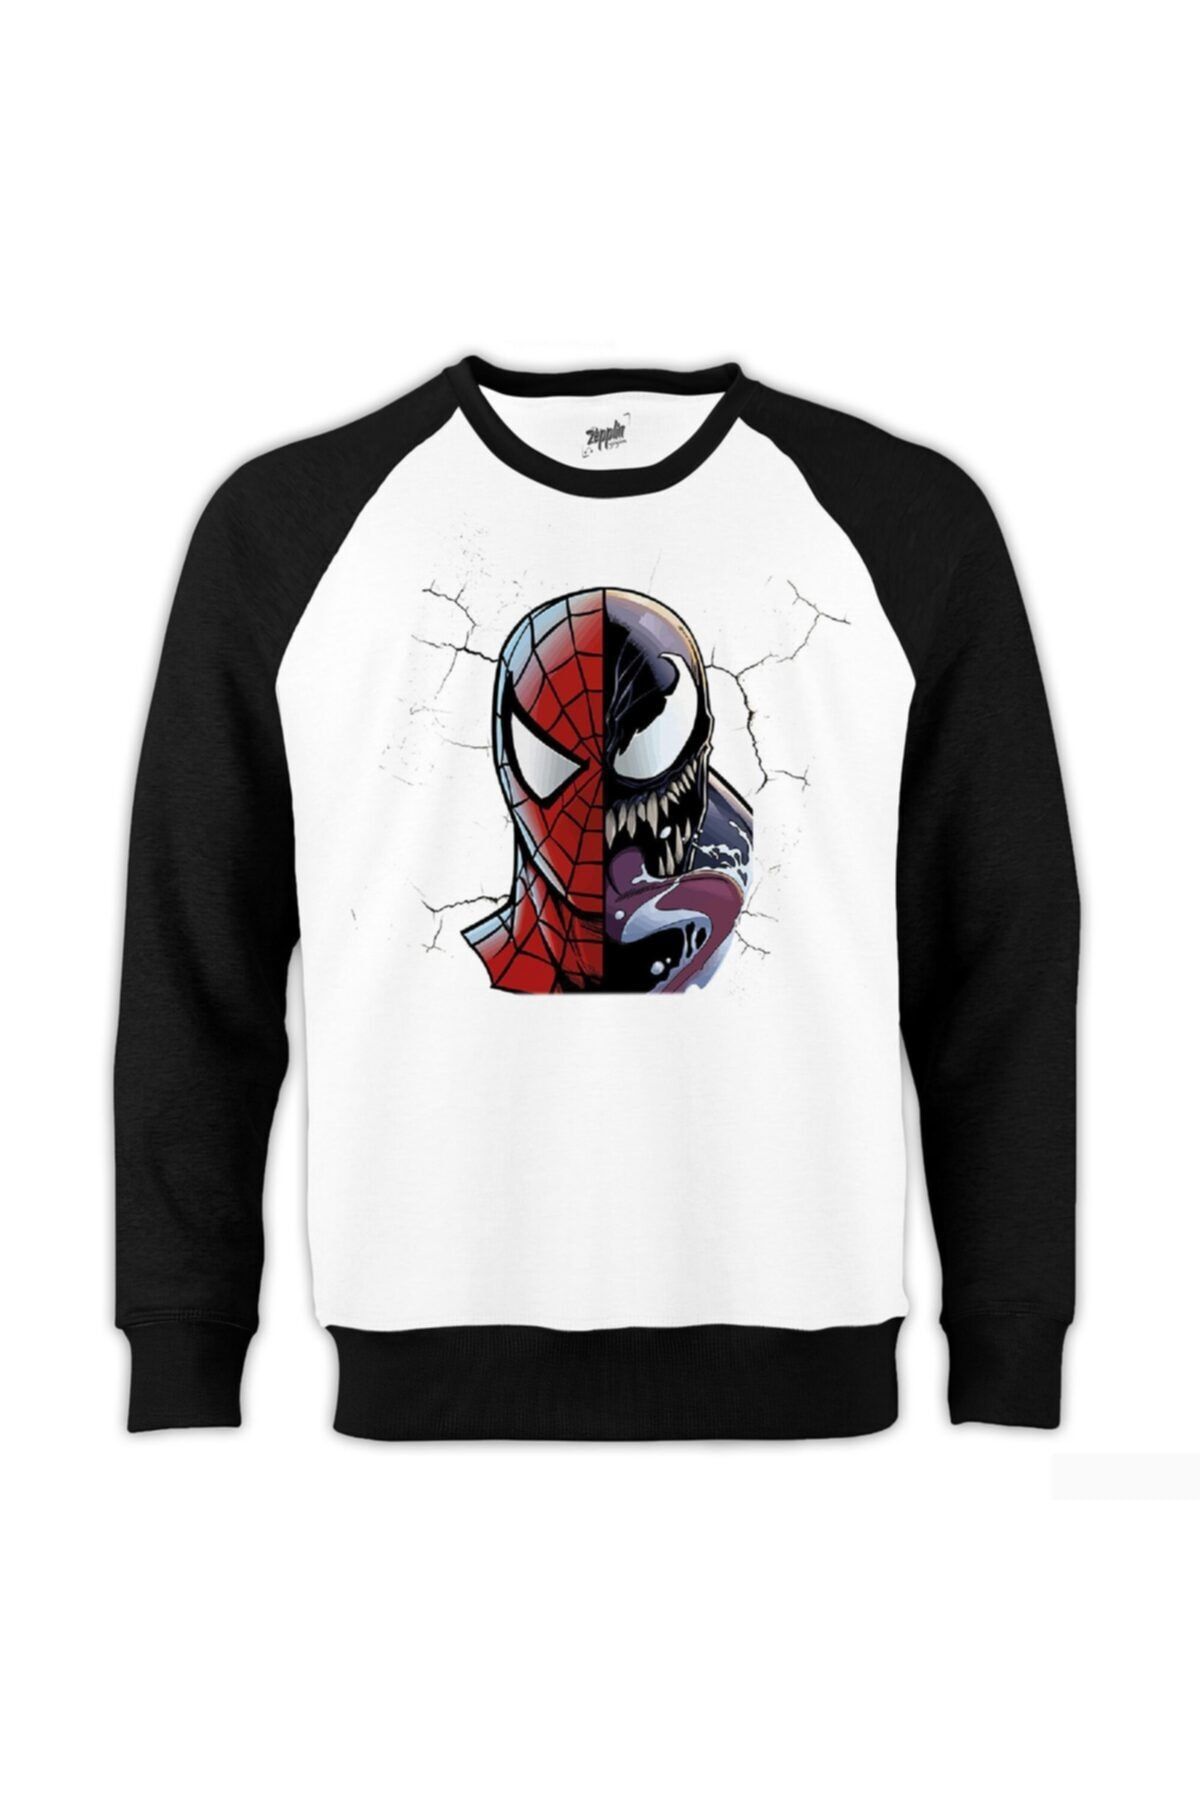 Z zepplin Venom Vs Spiderman Reglan Kol Beyaz Sweatshirt